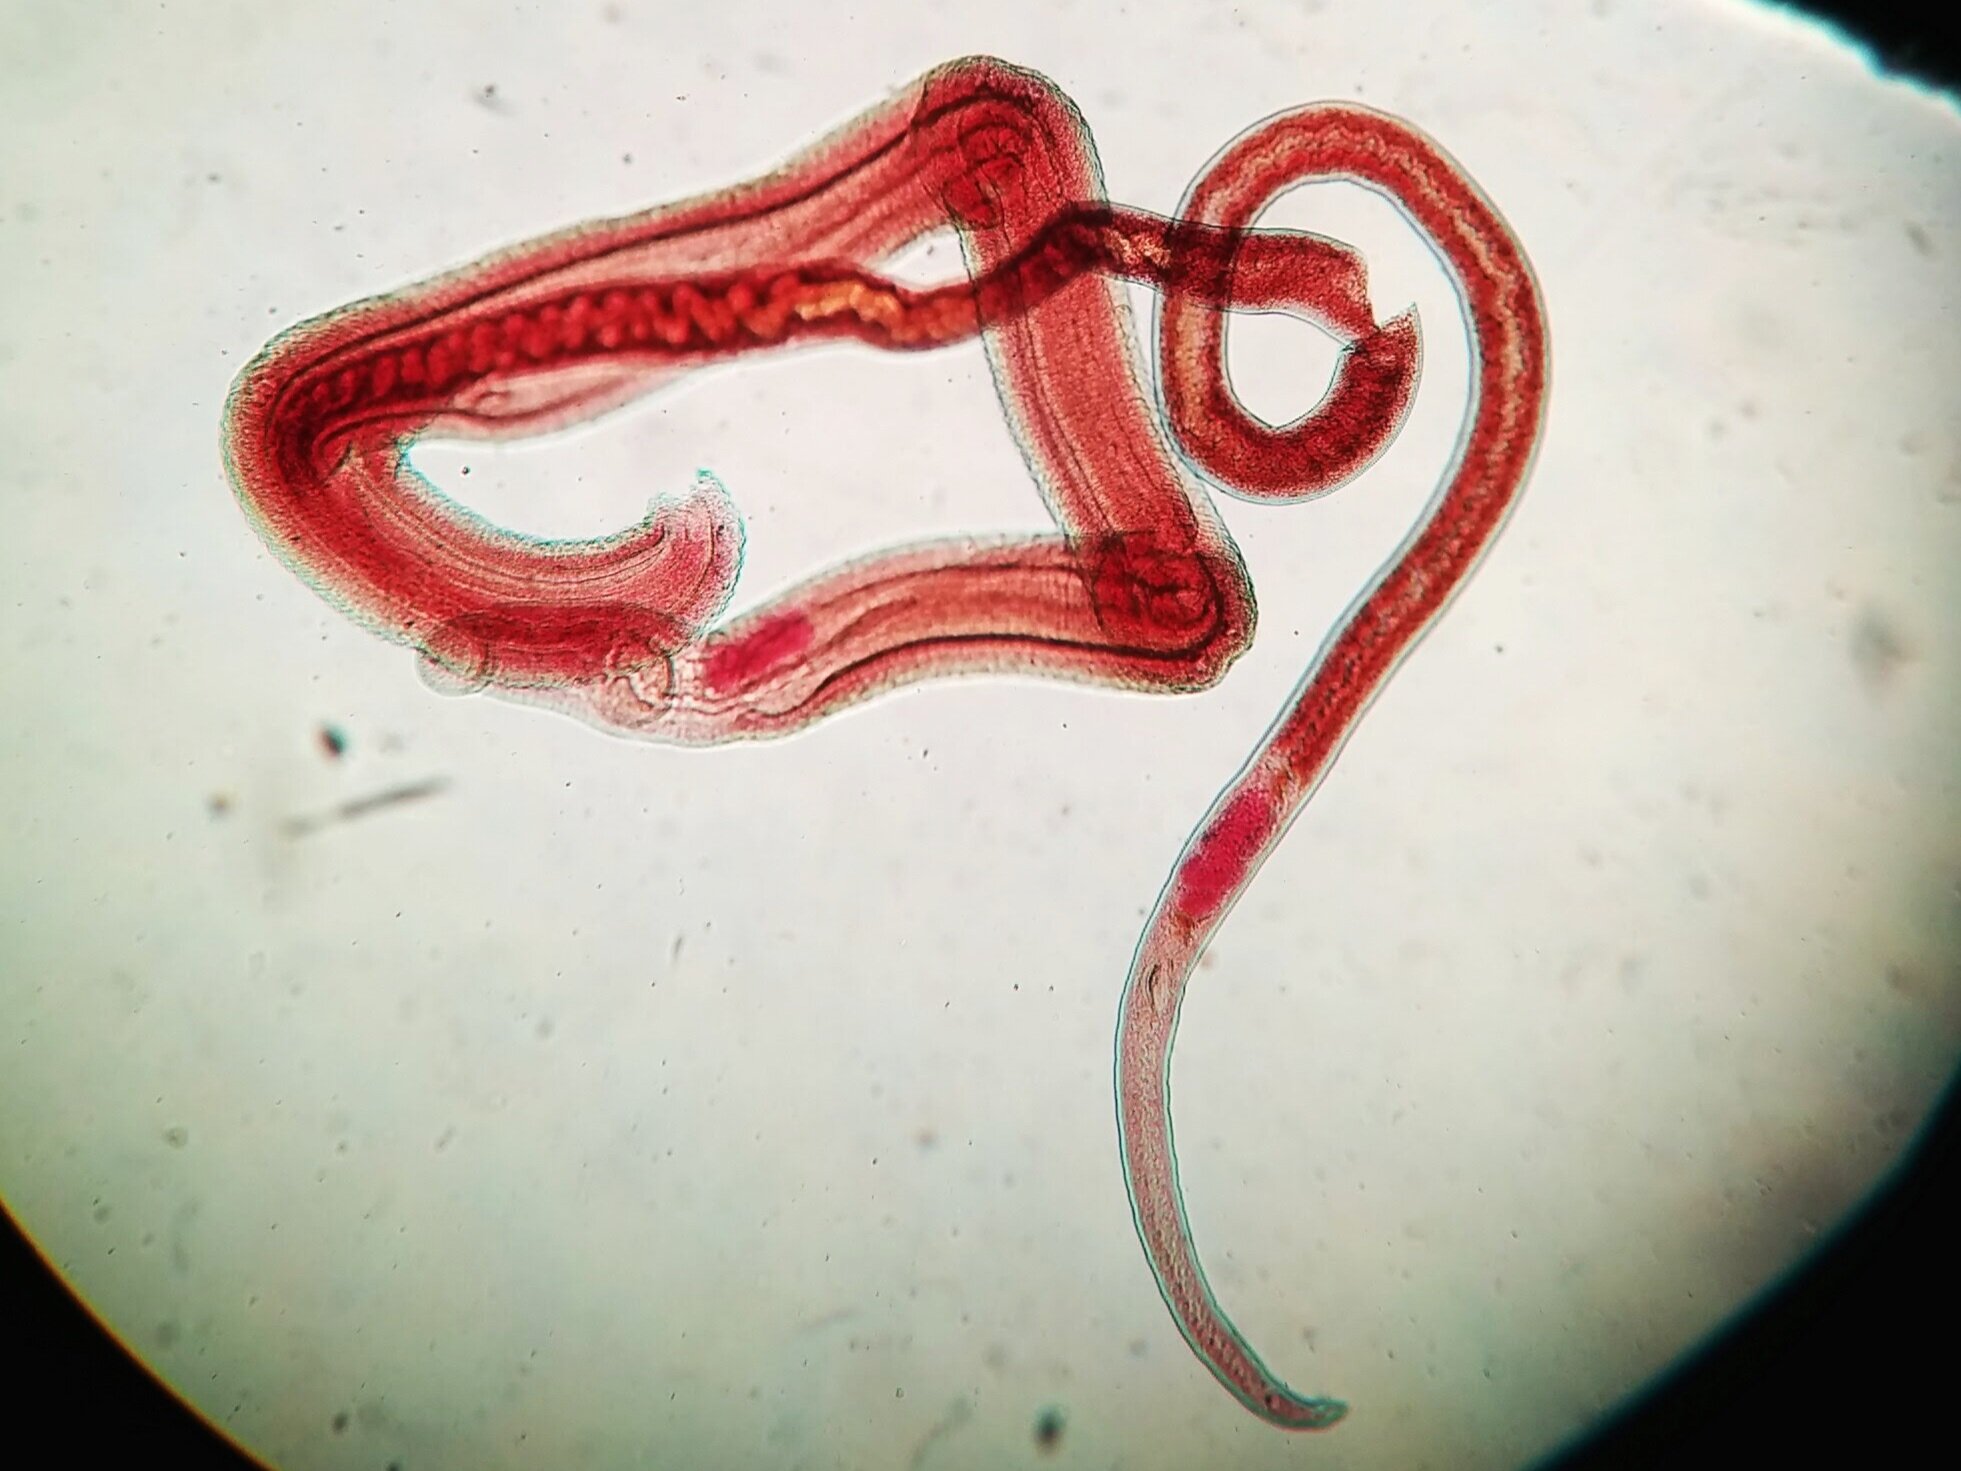   Schistosoma sp.  From purchased slide.  